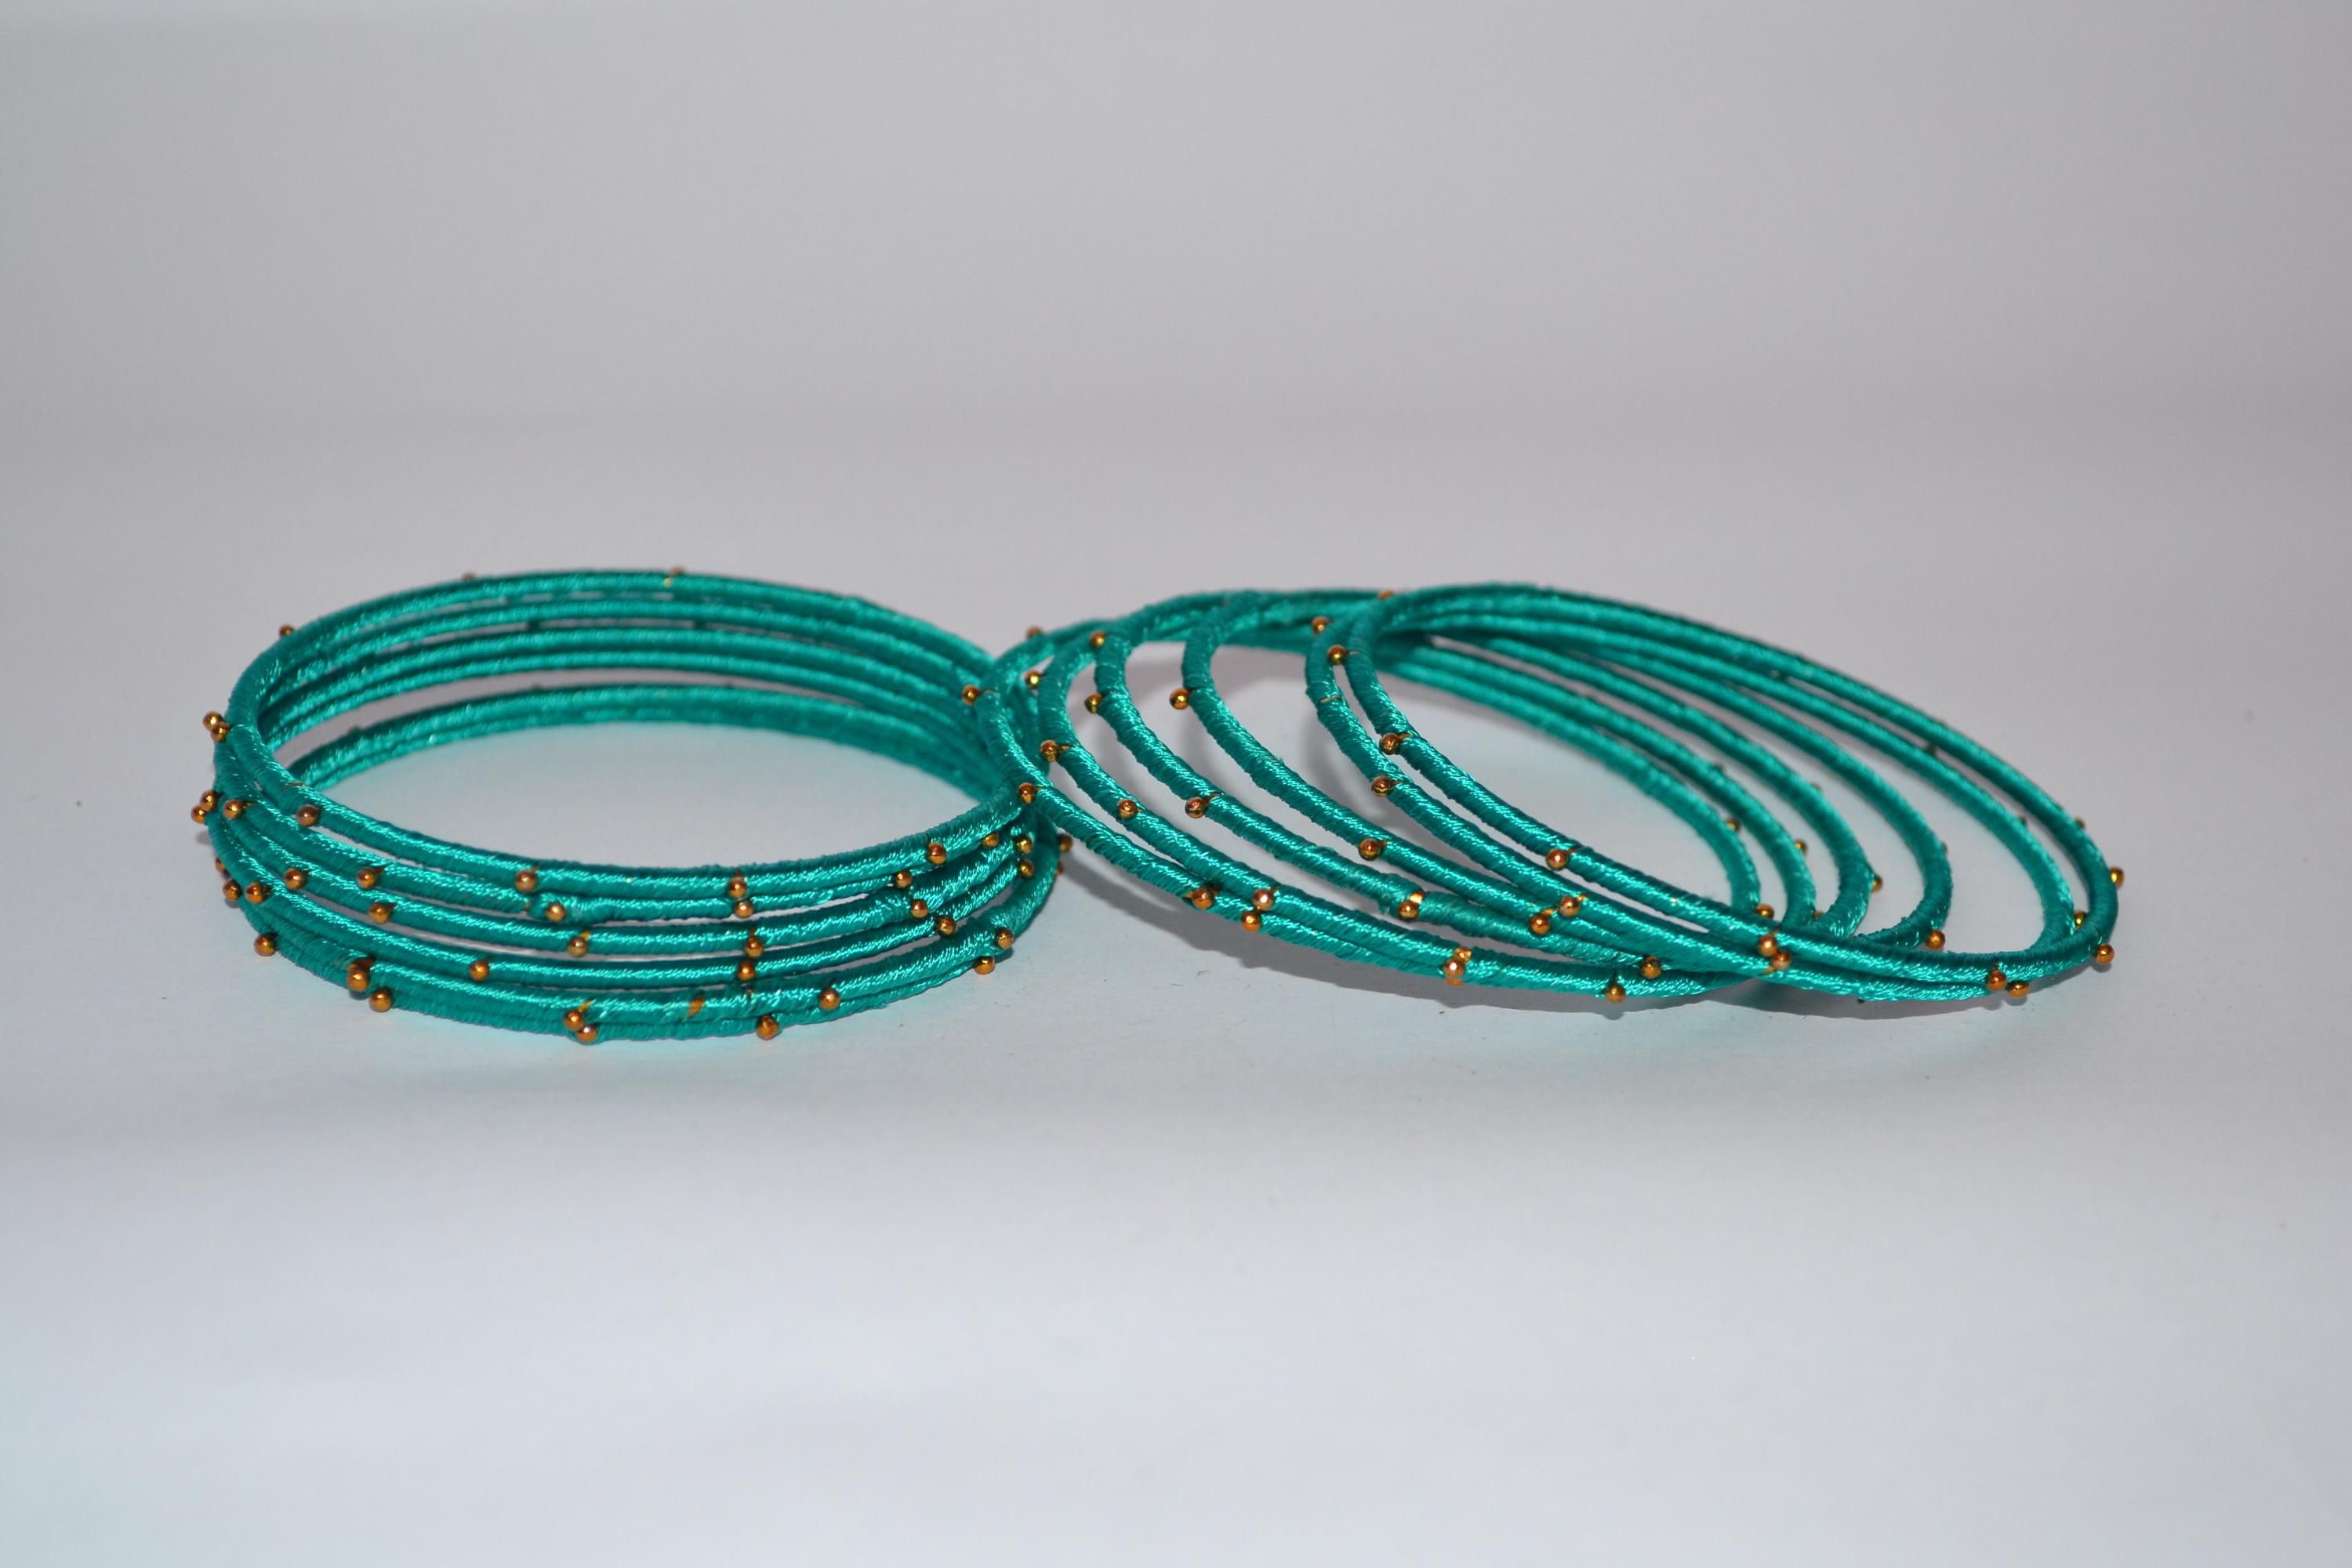 Aqua Green Bangle Bracelet by Manju Bangle M5009-9 12 Piece Set Jewellery 4